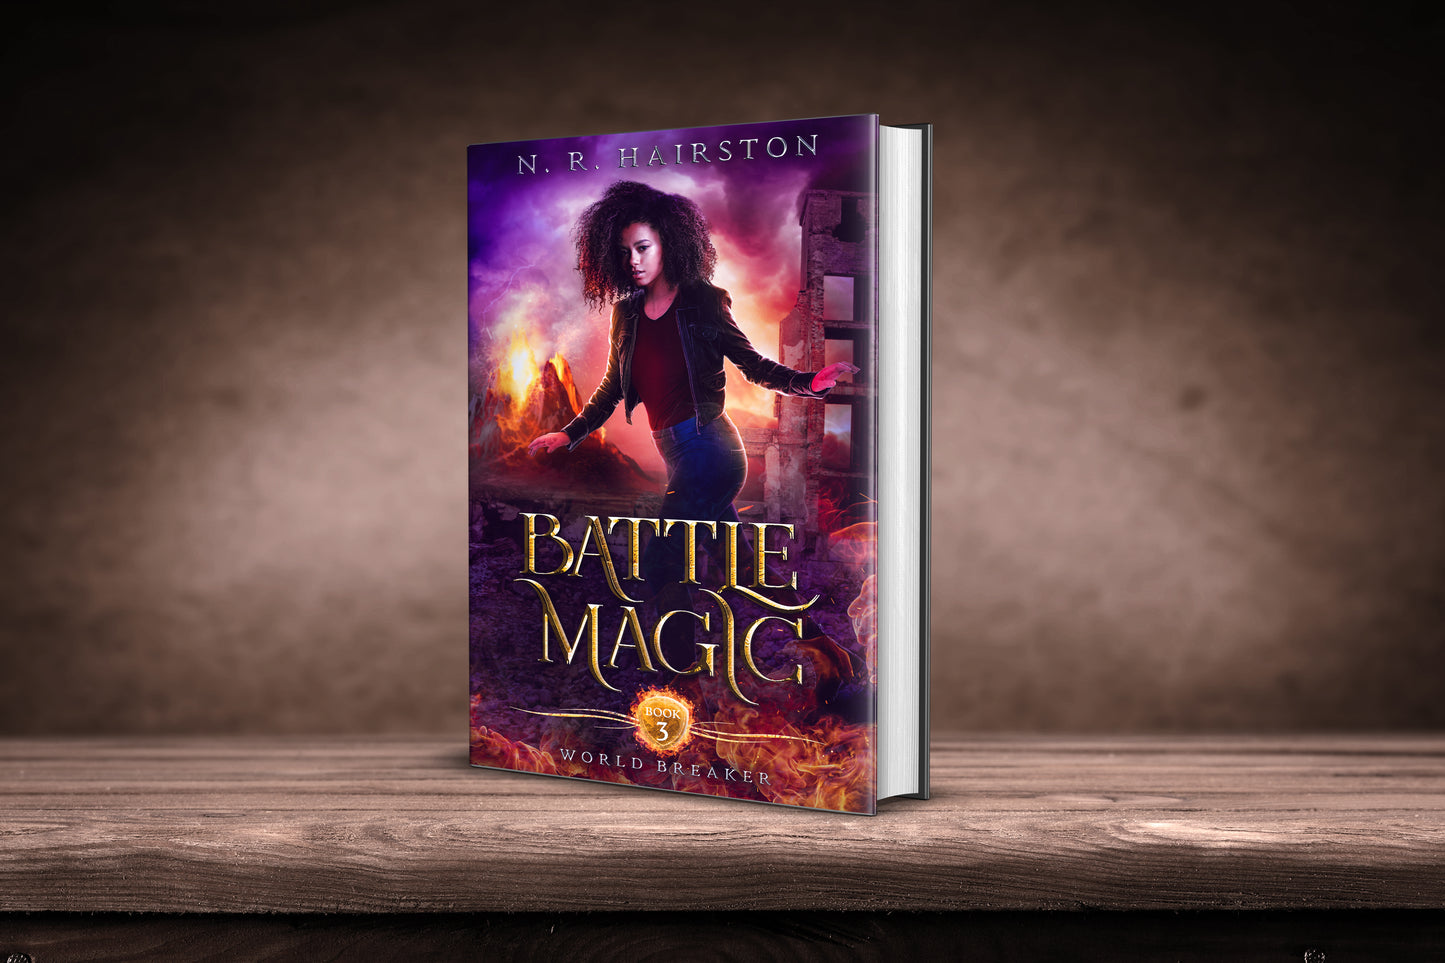 Battle Magic (World Breaker Book 3)  Paperback